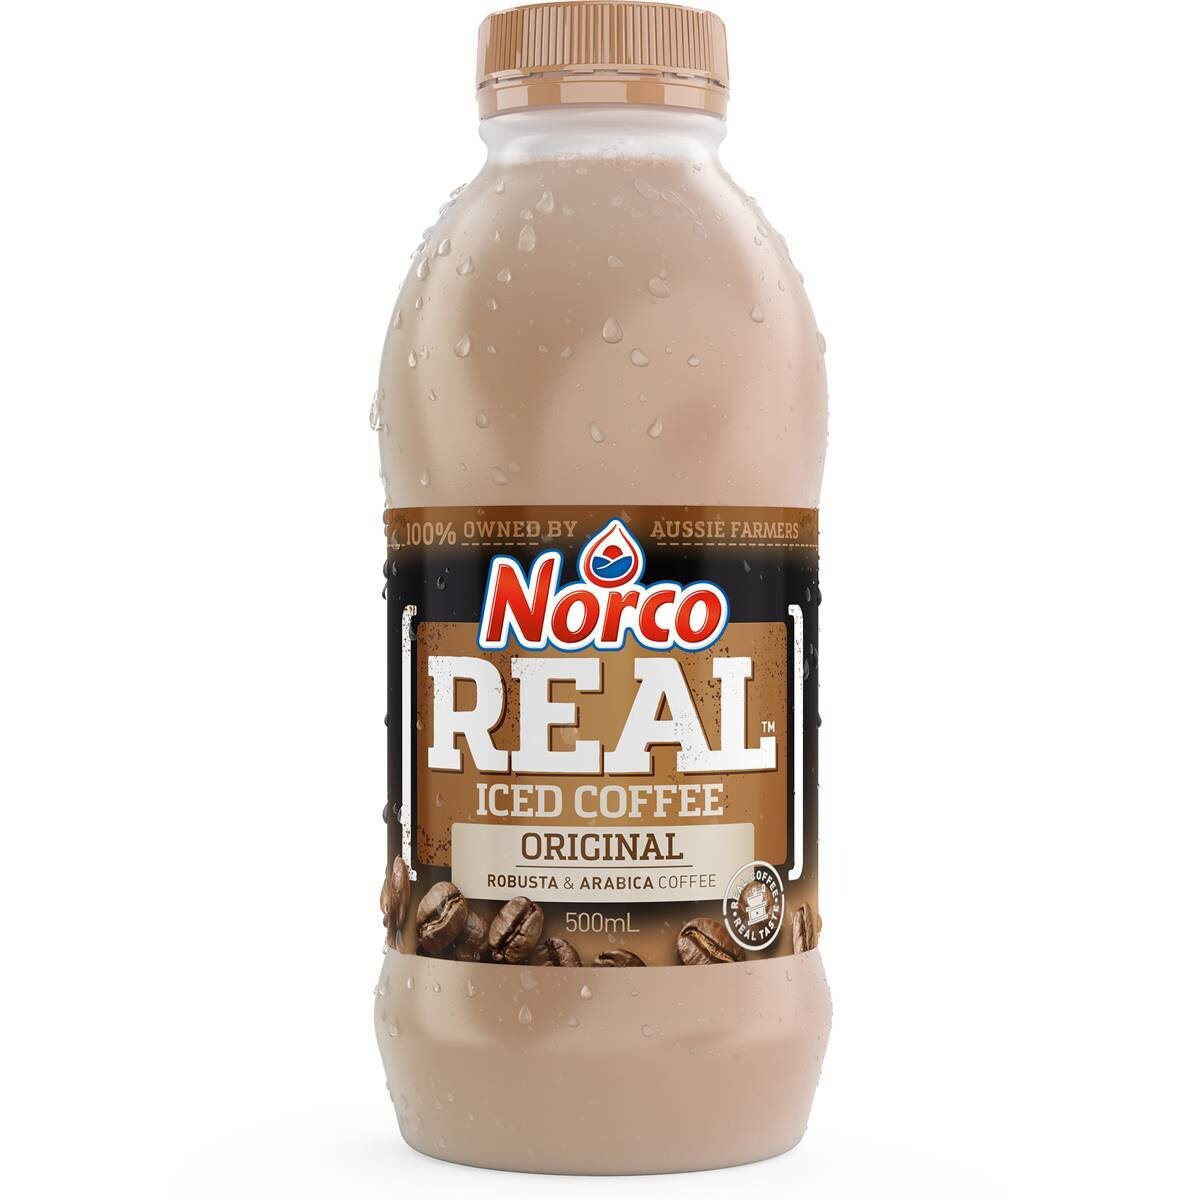 Norco 500ml Iced Coffee Original